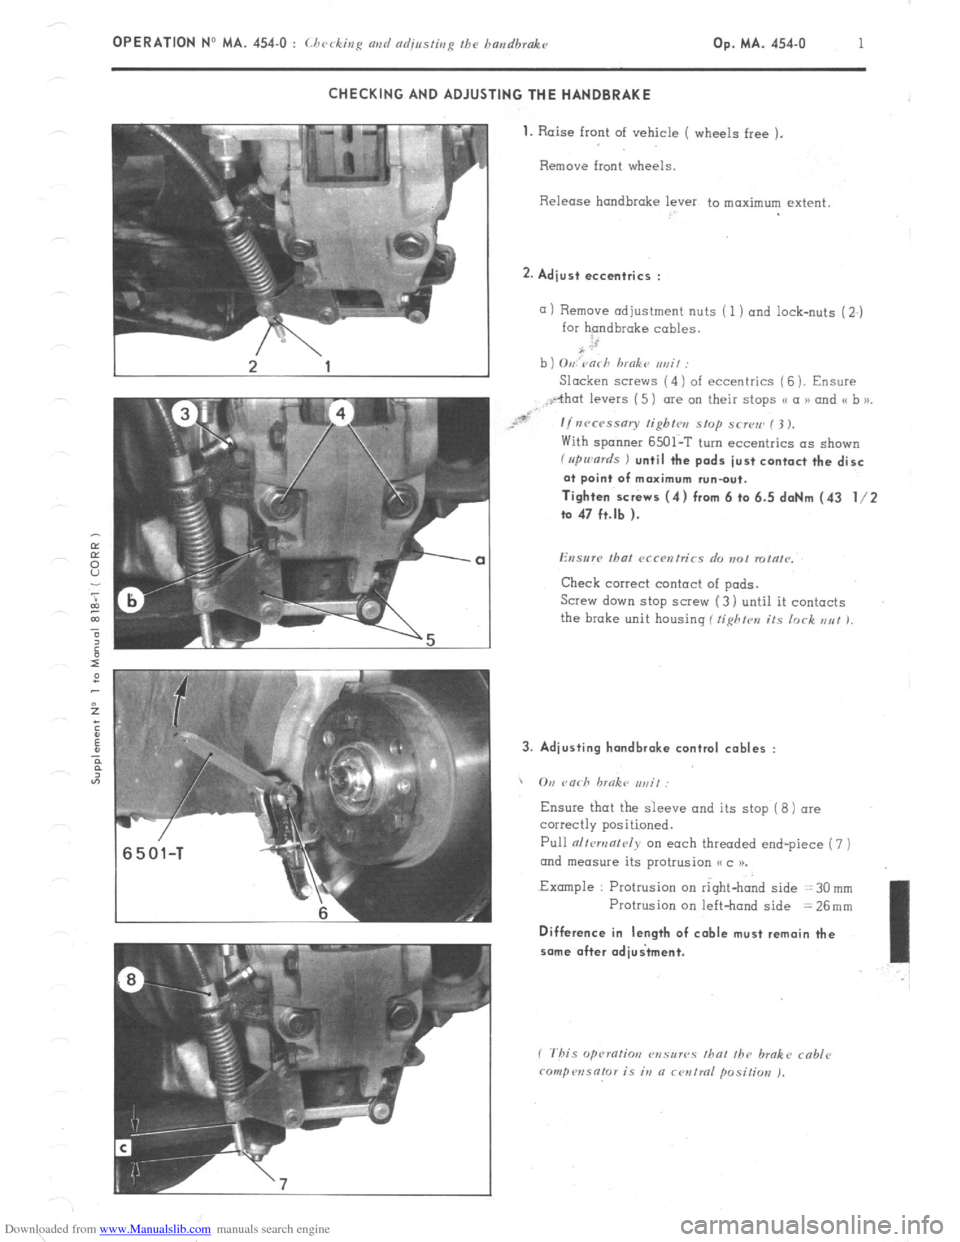 Citroen CX 1981 1.G Service Manual Downloaded from www.Manualslib.com manuals search engine OPERATION No MA. 454-O : Lhcckiu~ avd adjnsfbrR fhe bandbrake op. MA. 454-u I CHECKING AND ADJUSTING THE HANDBRAKE 
1. 
Raise front of vehicle 